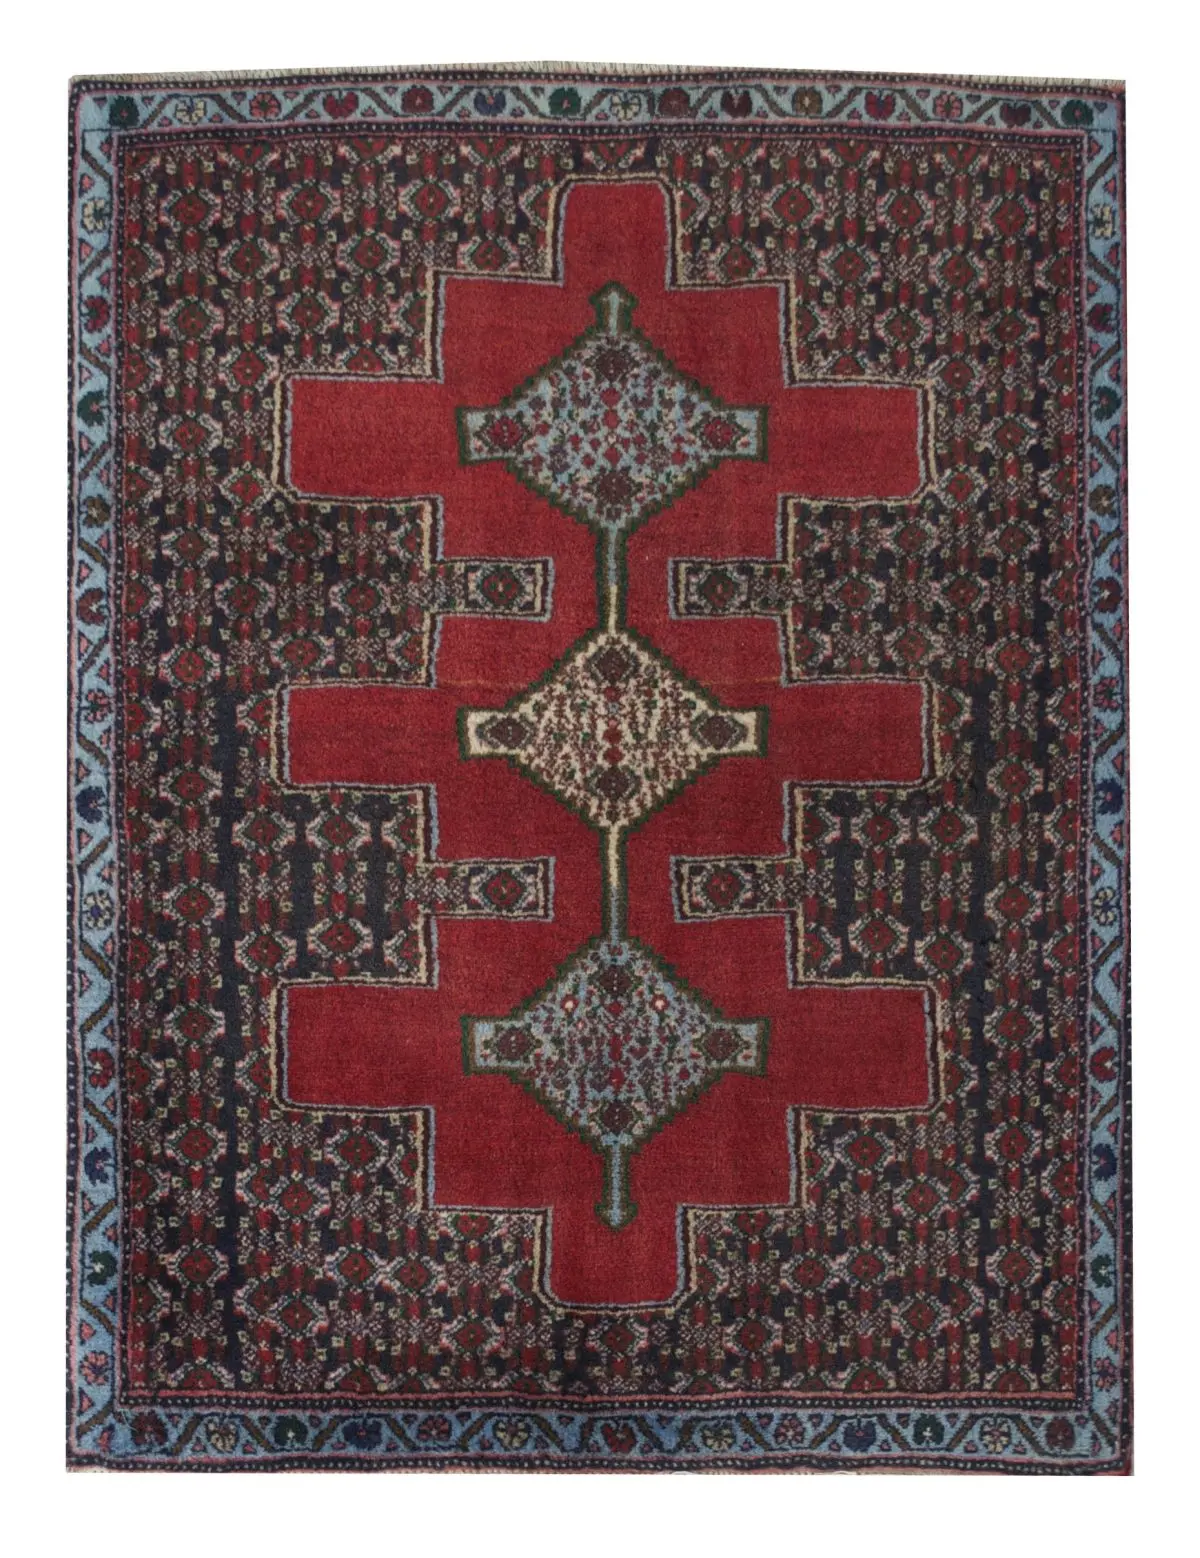 Persian Seneh 2' 6" x 3' 1" Handmade Area Rug - Shabahang Royal Carpet